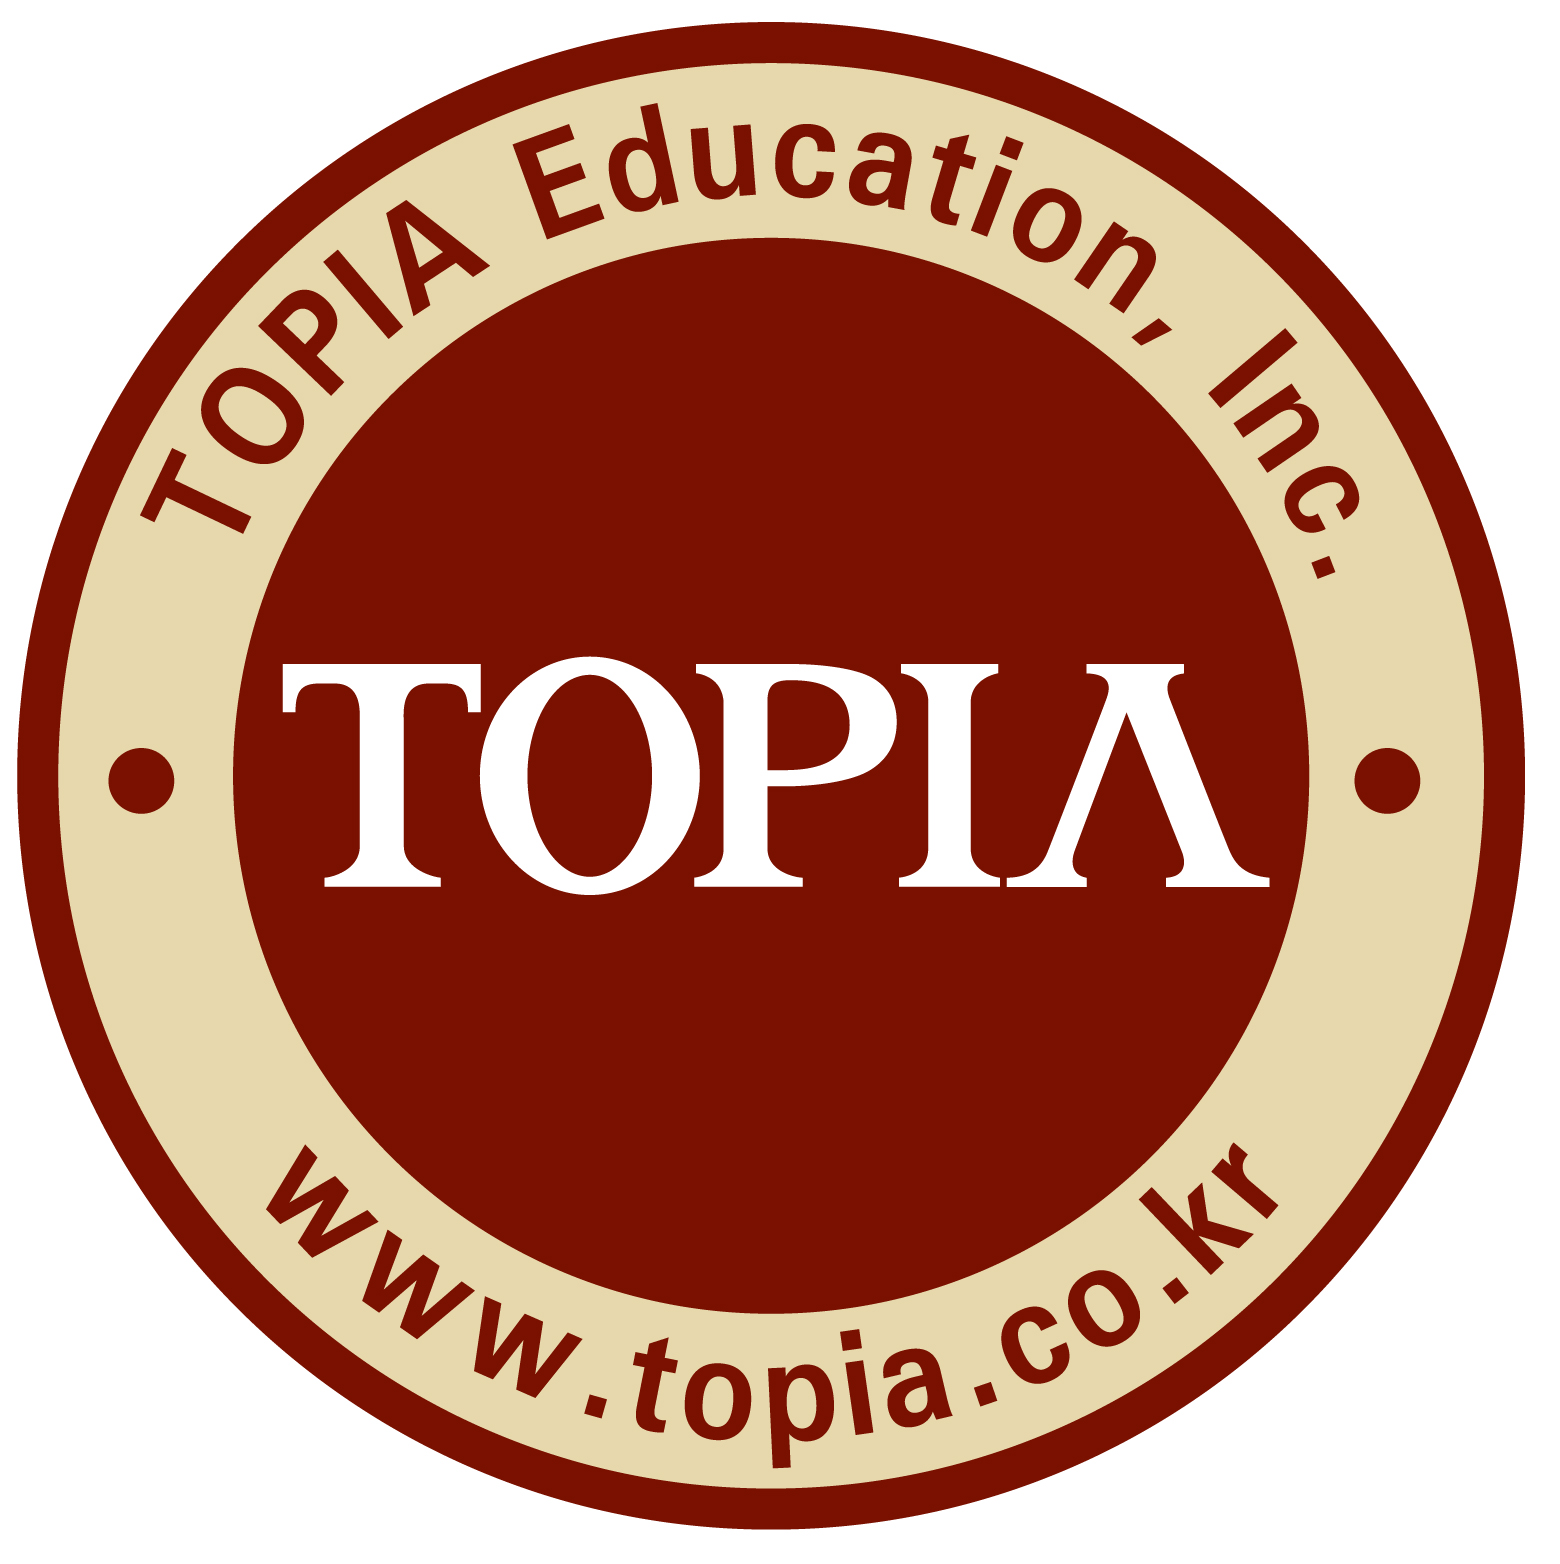 TOPIA Education